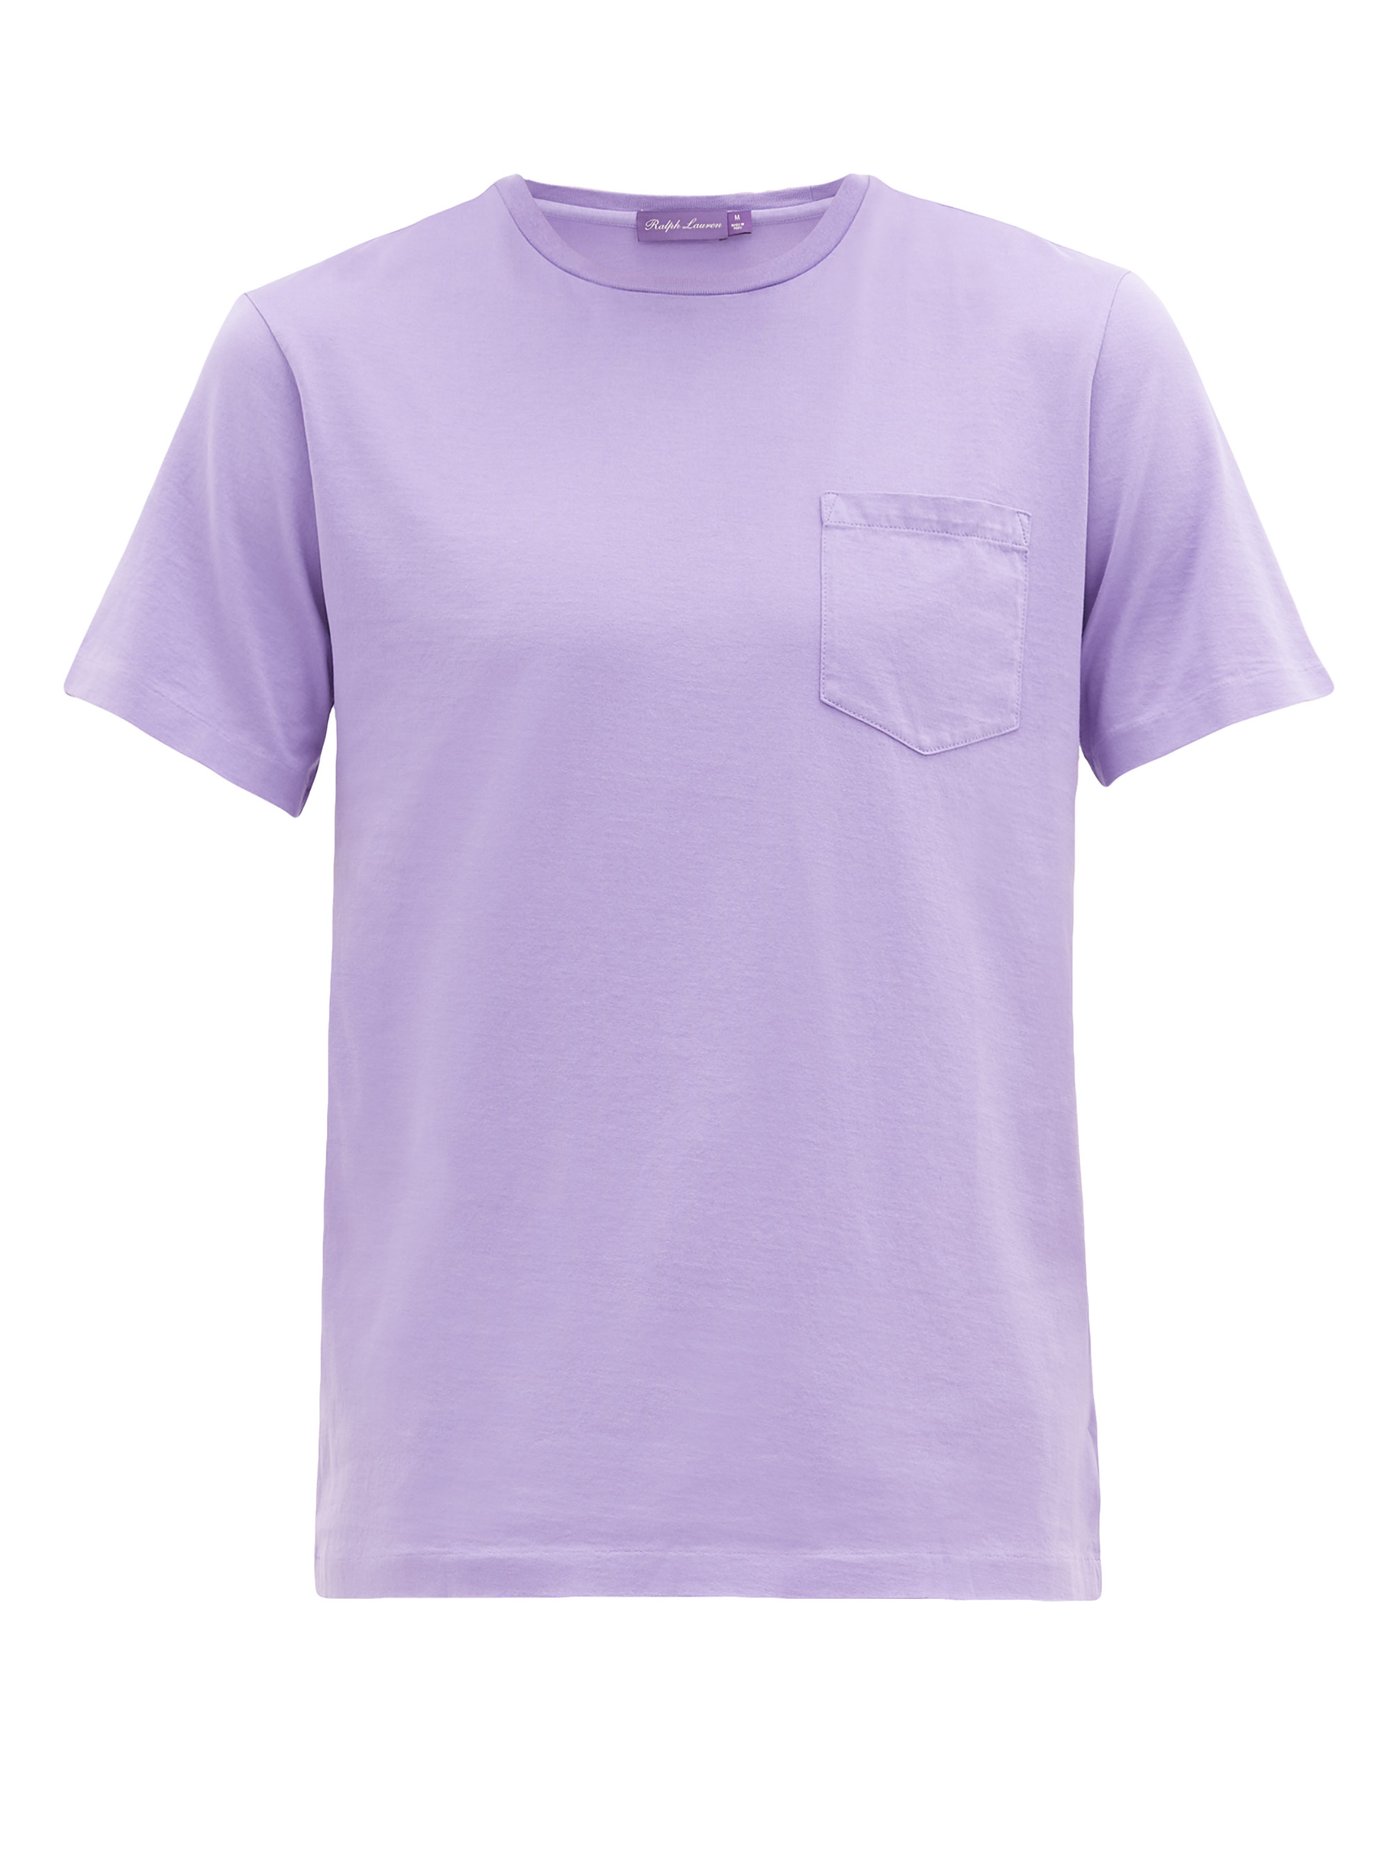 purple label t shirt